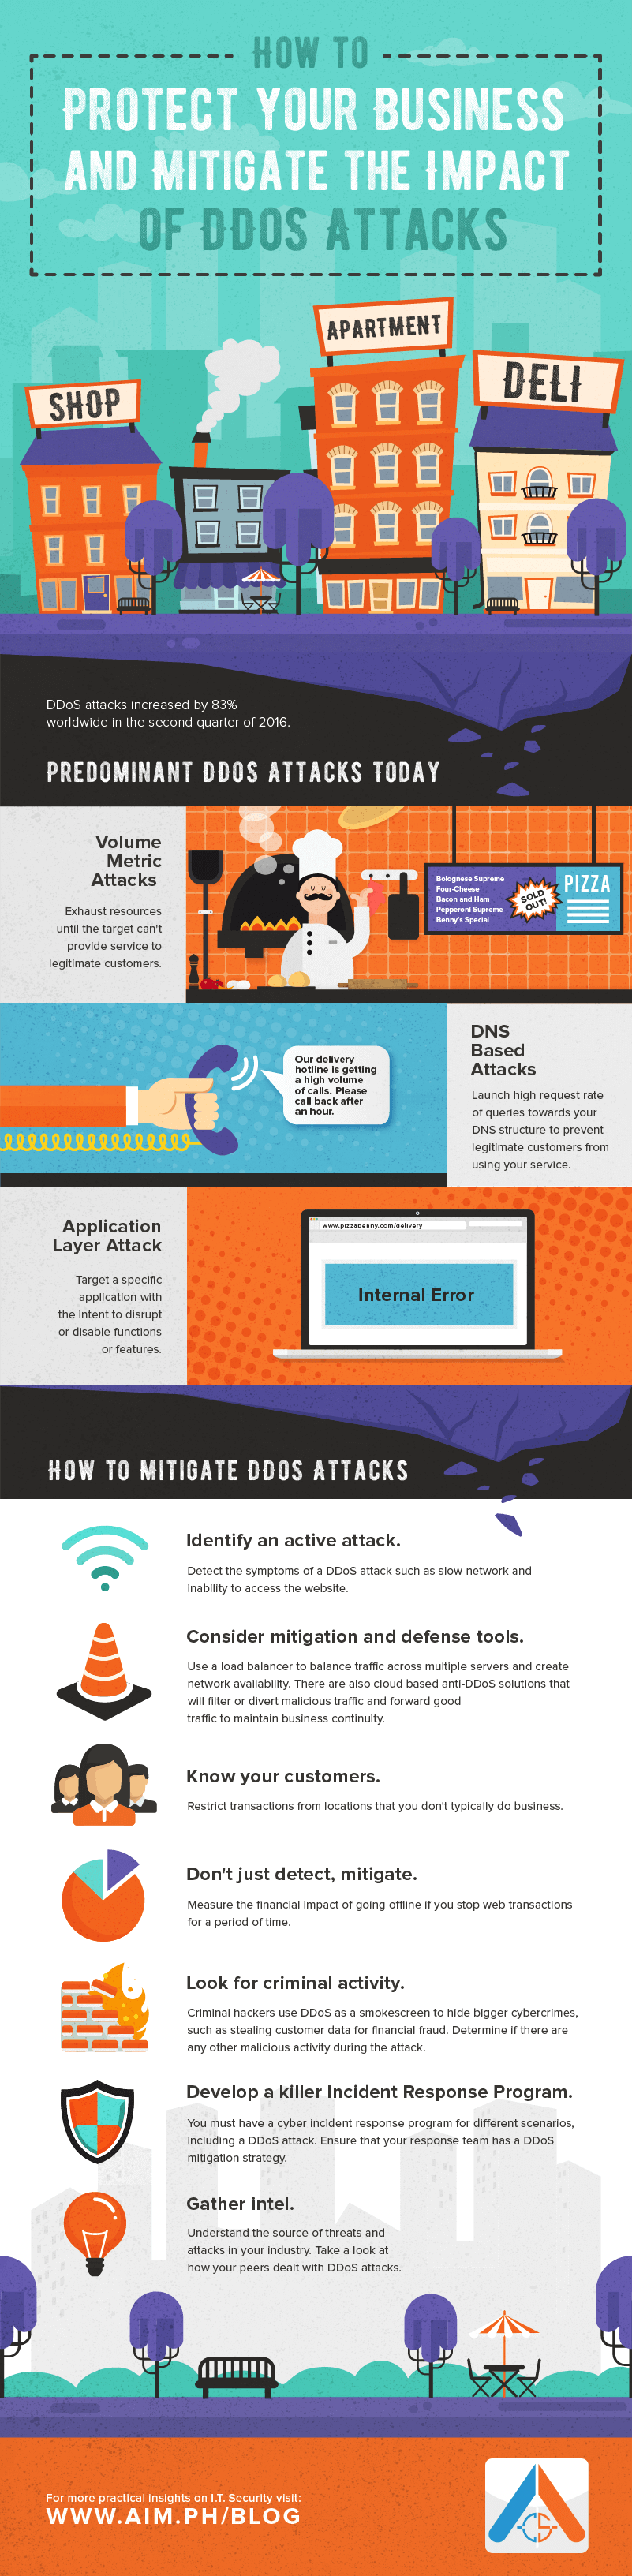 AIM-DDoS-Attacks